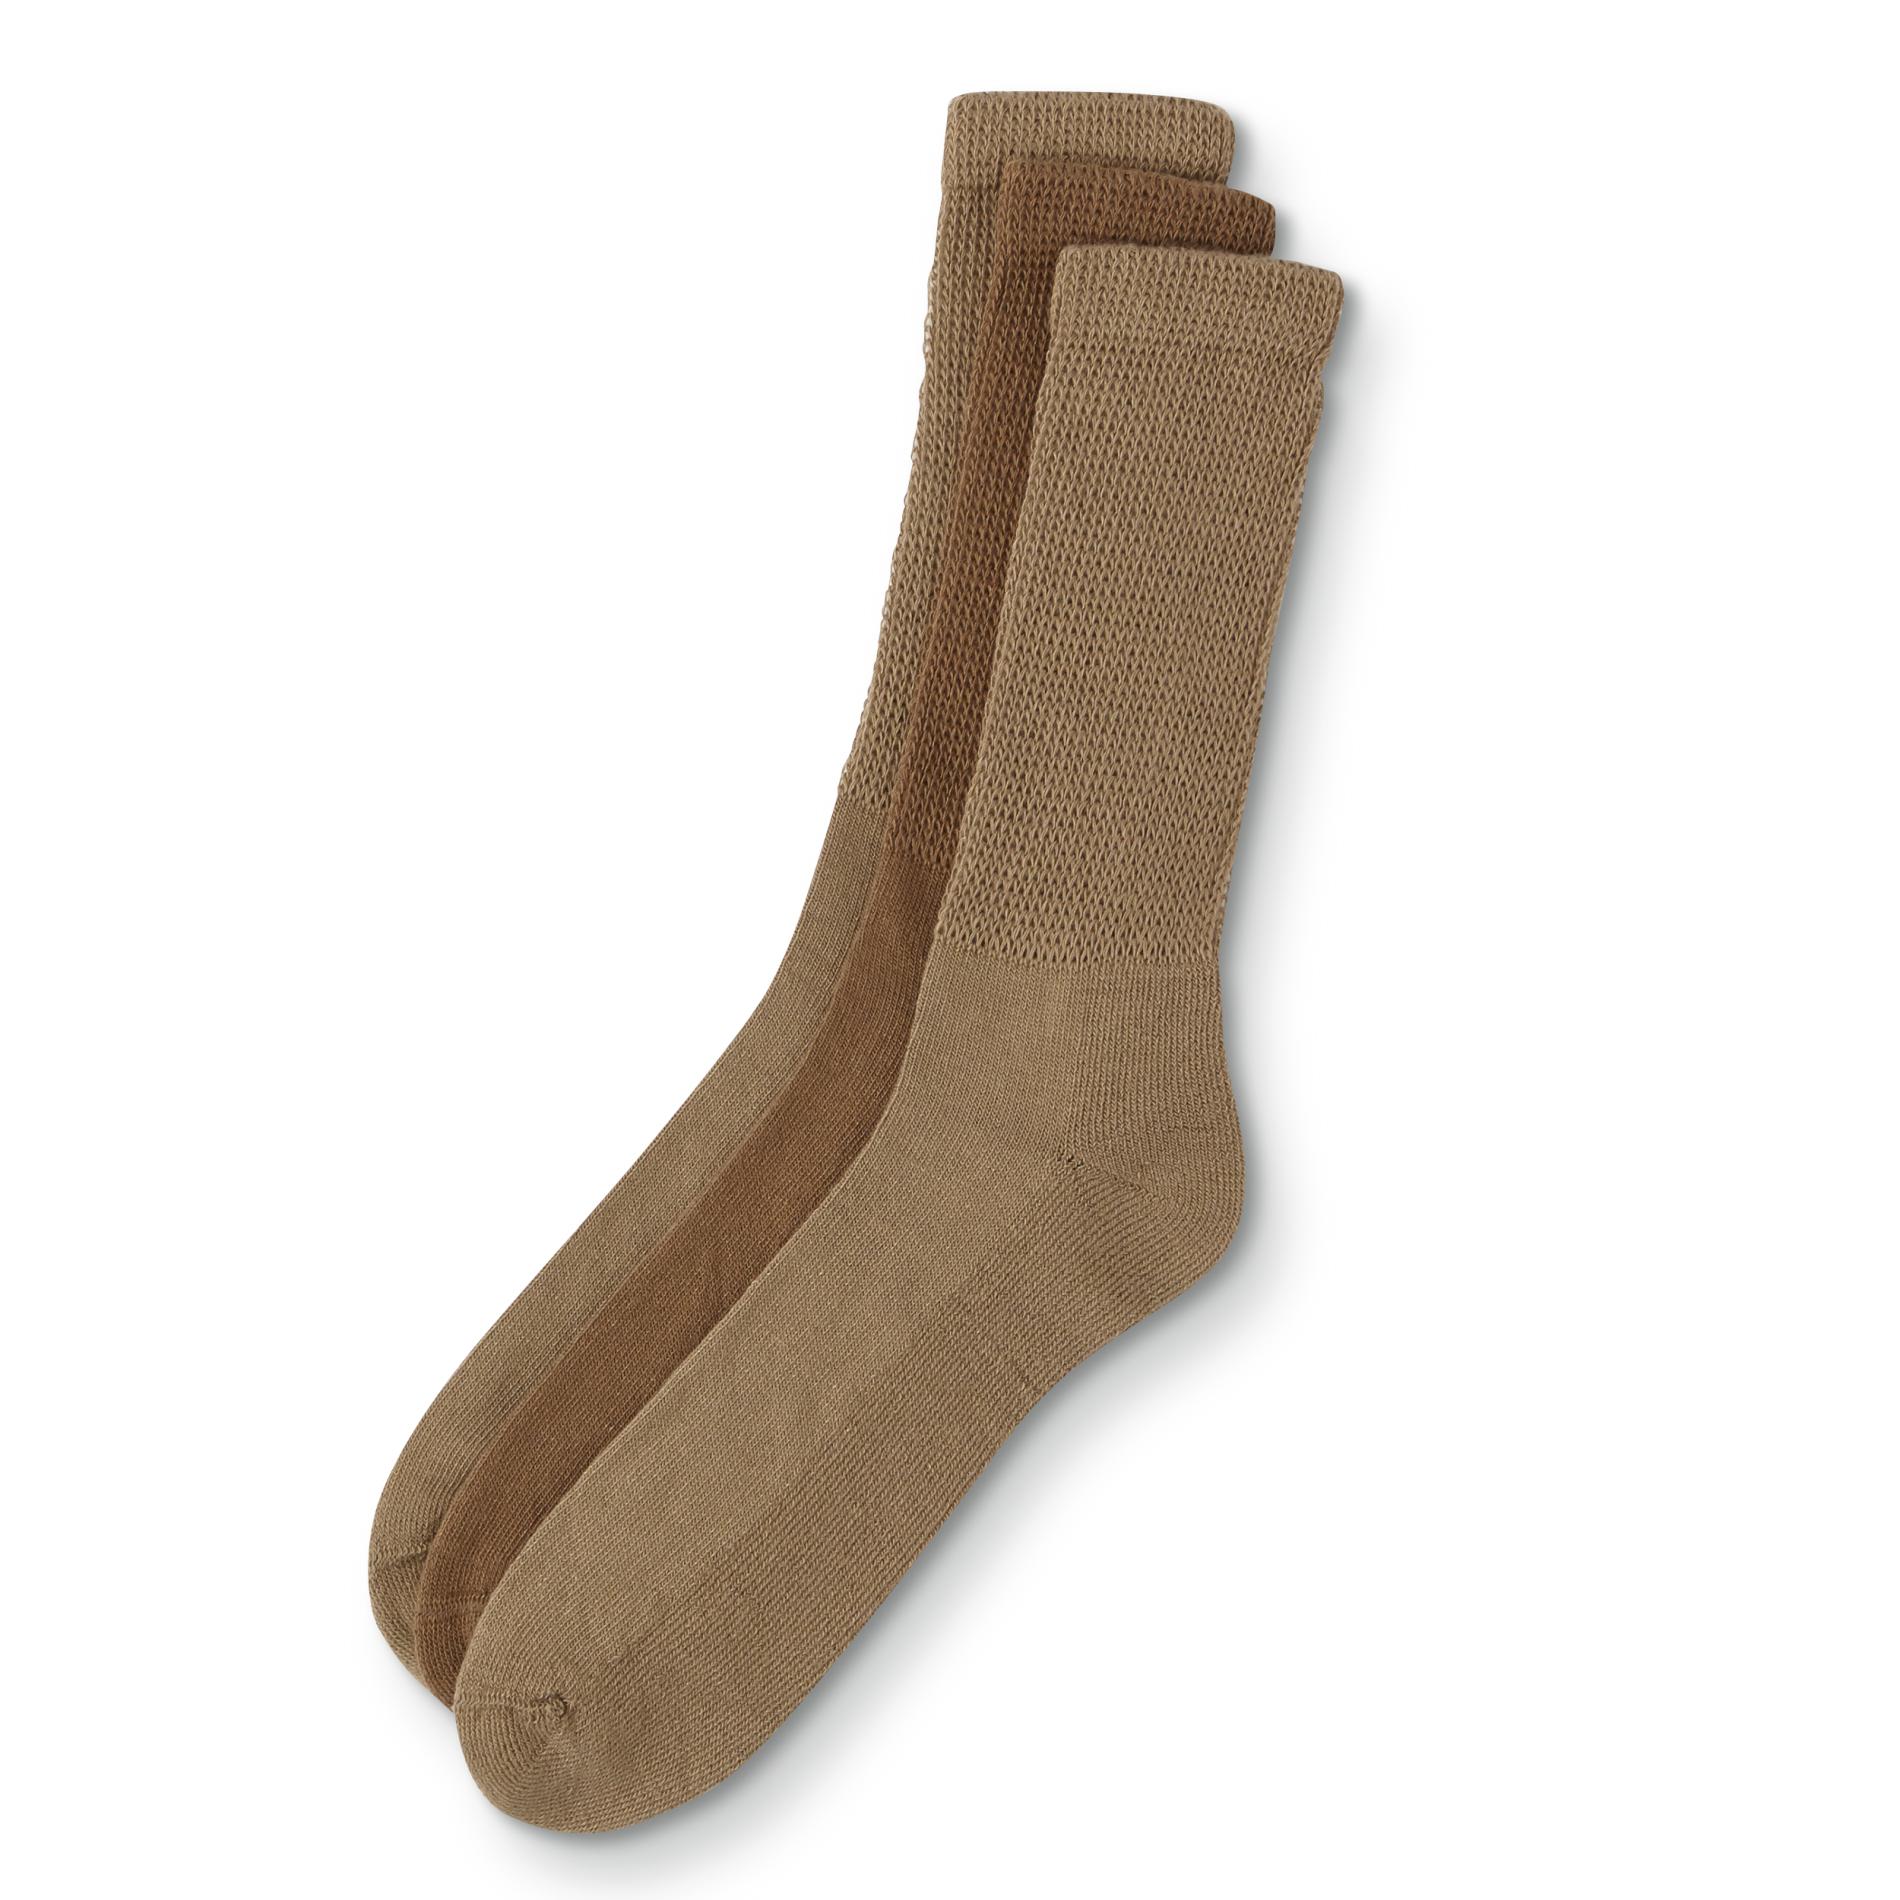 Simply Styled Men's 3-Pairs Non-Binding Wellness Crew Dress Socks